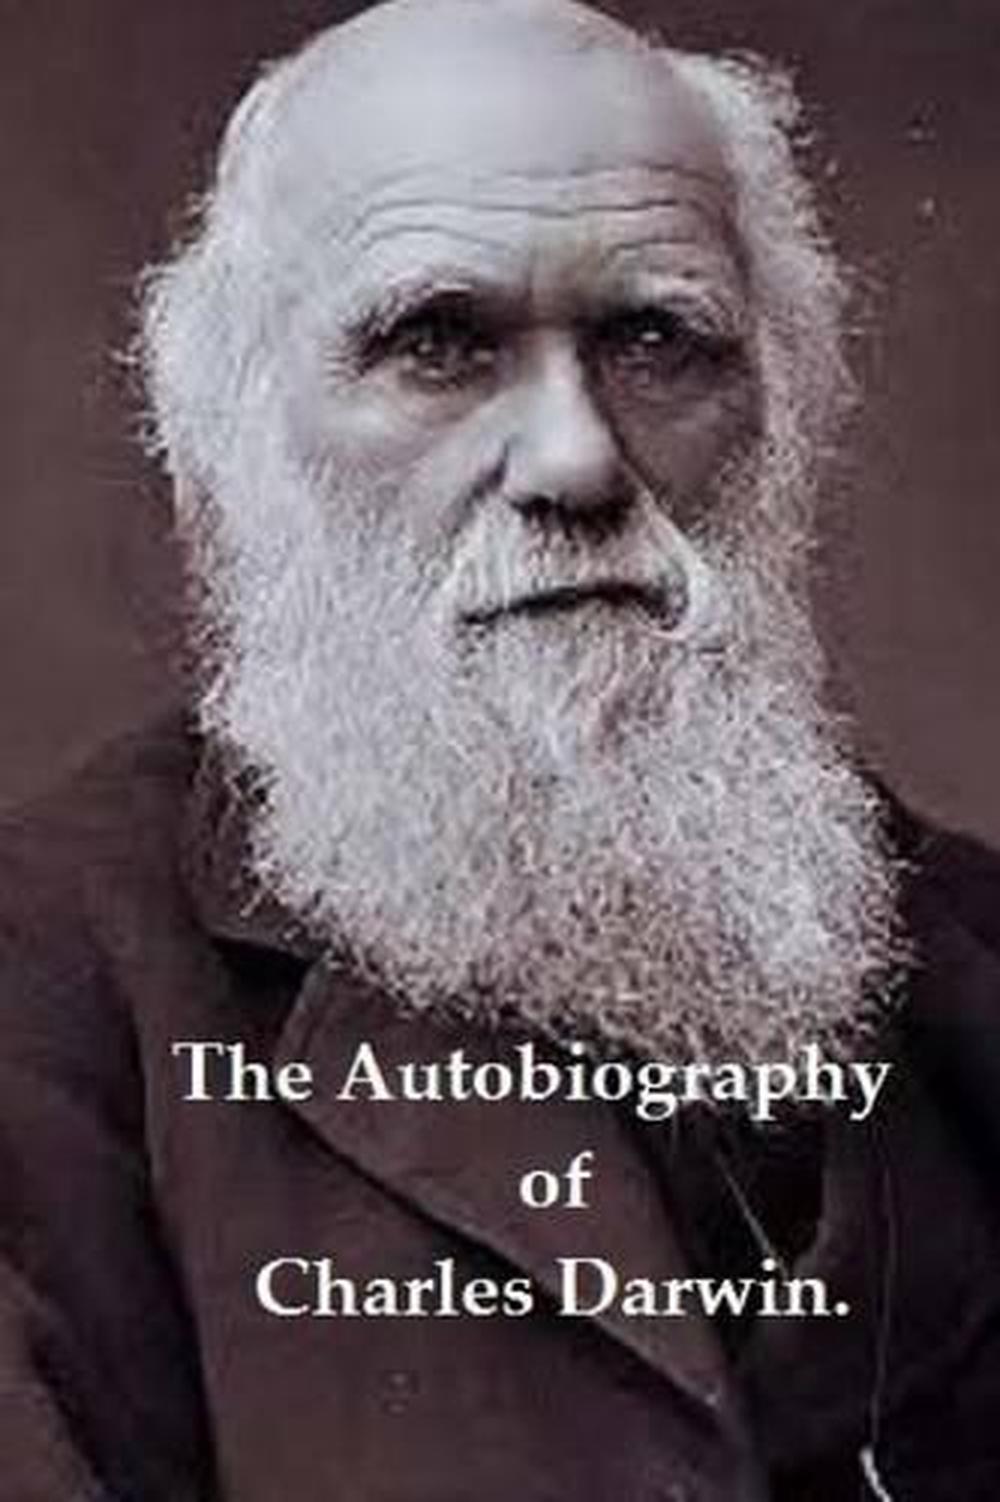 charles darwin biography essay